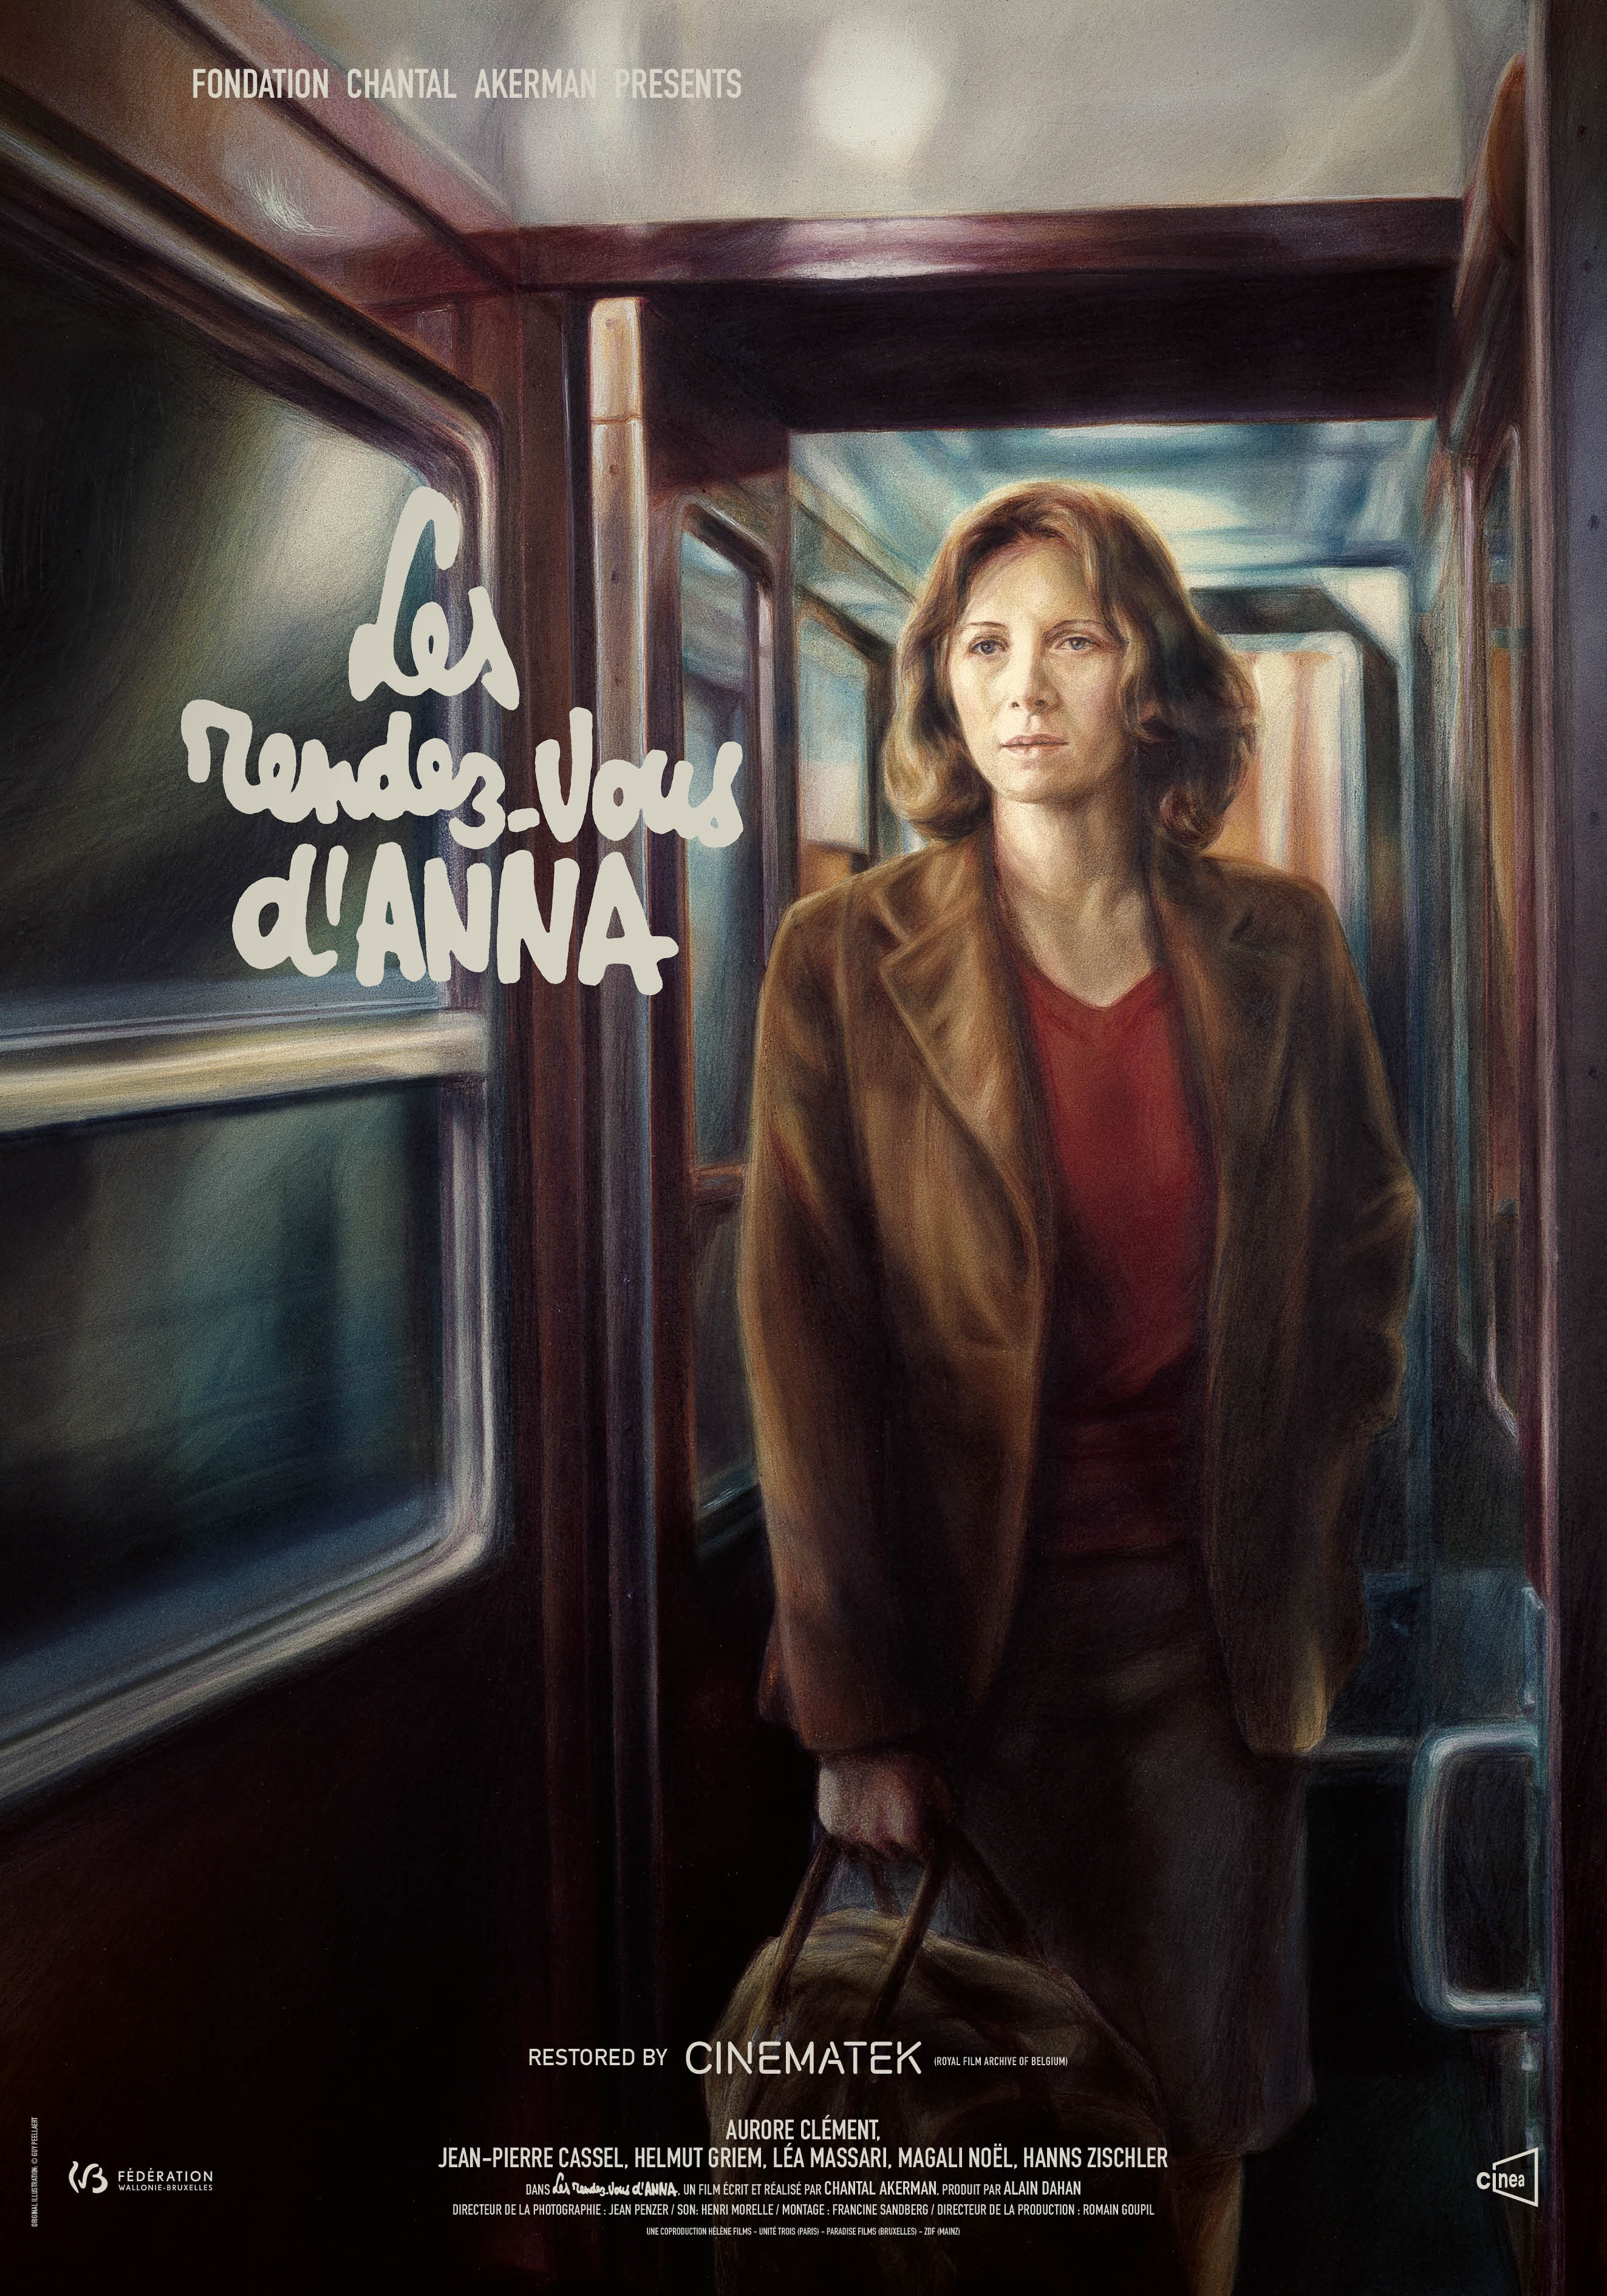 Les rendez-vous d'Anna (Chantal Akerman, 1978)